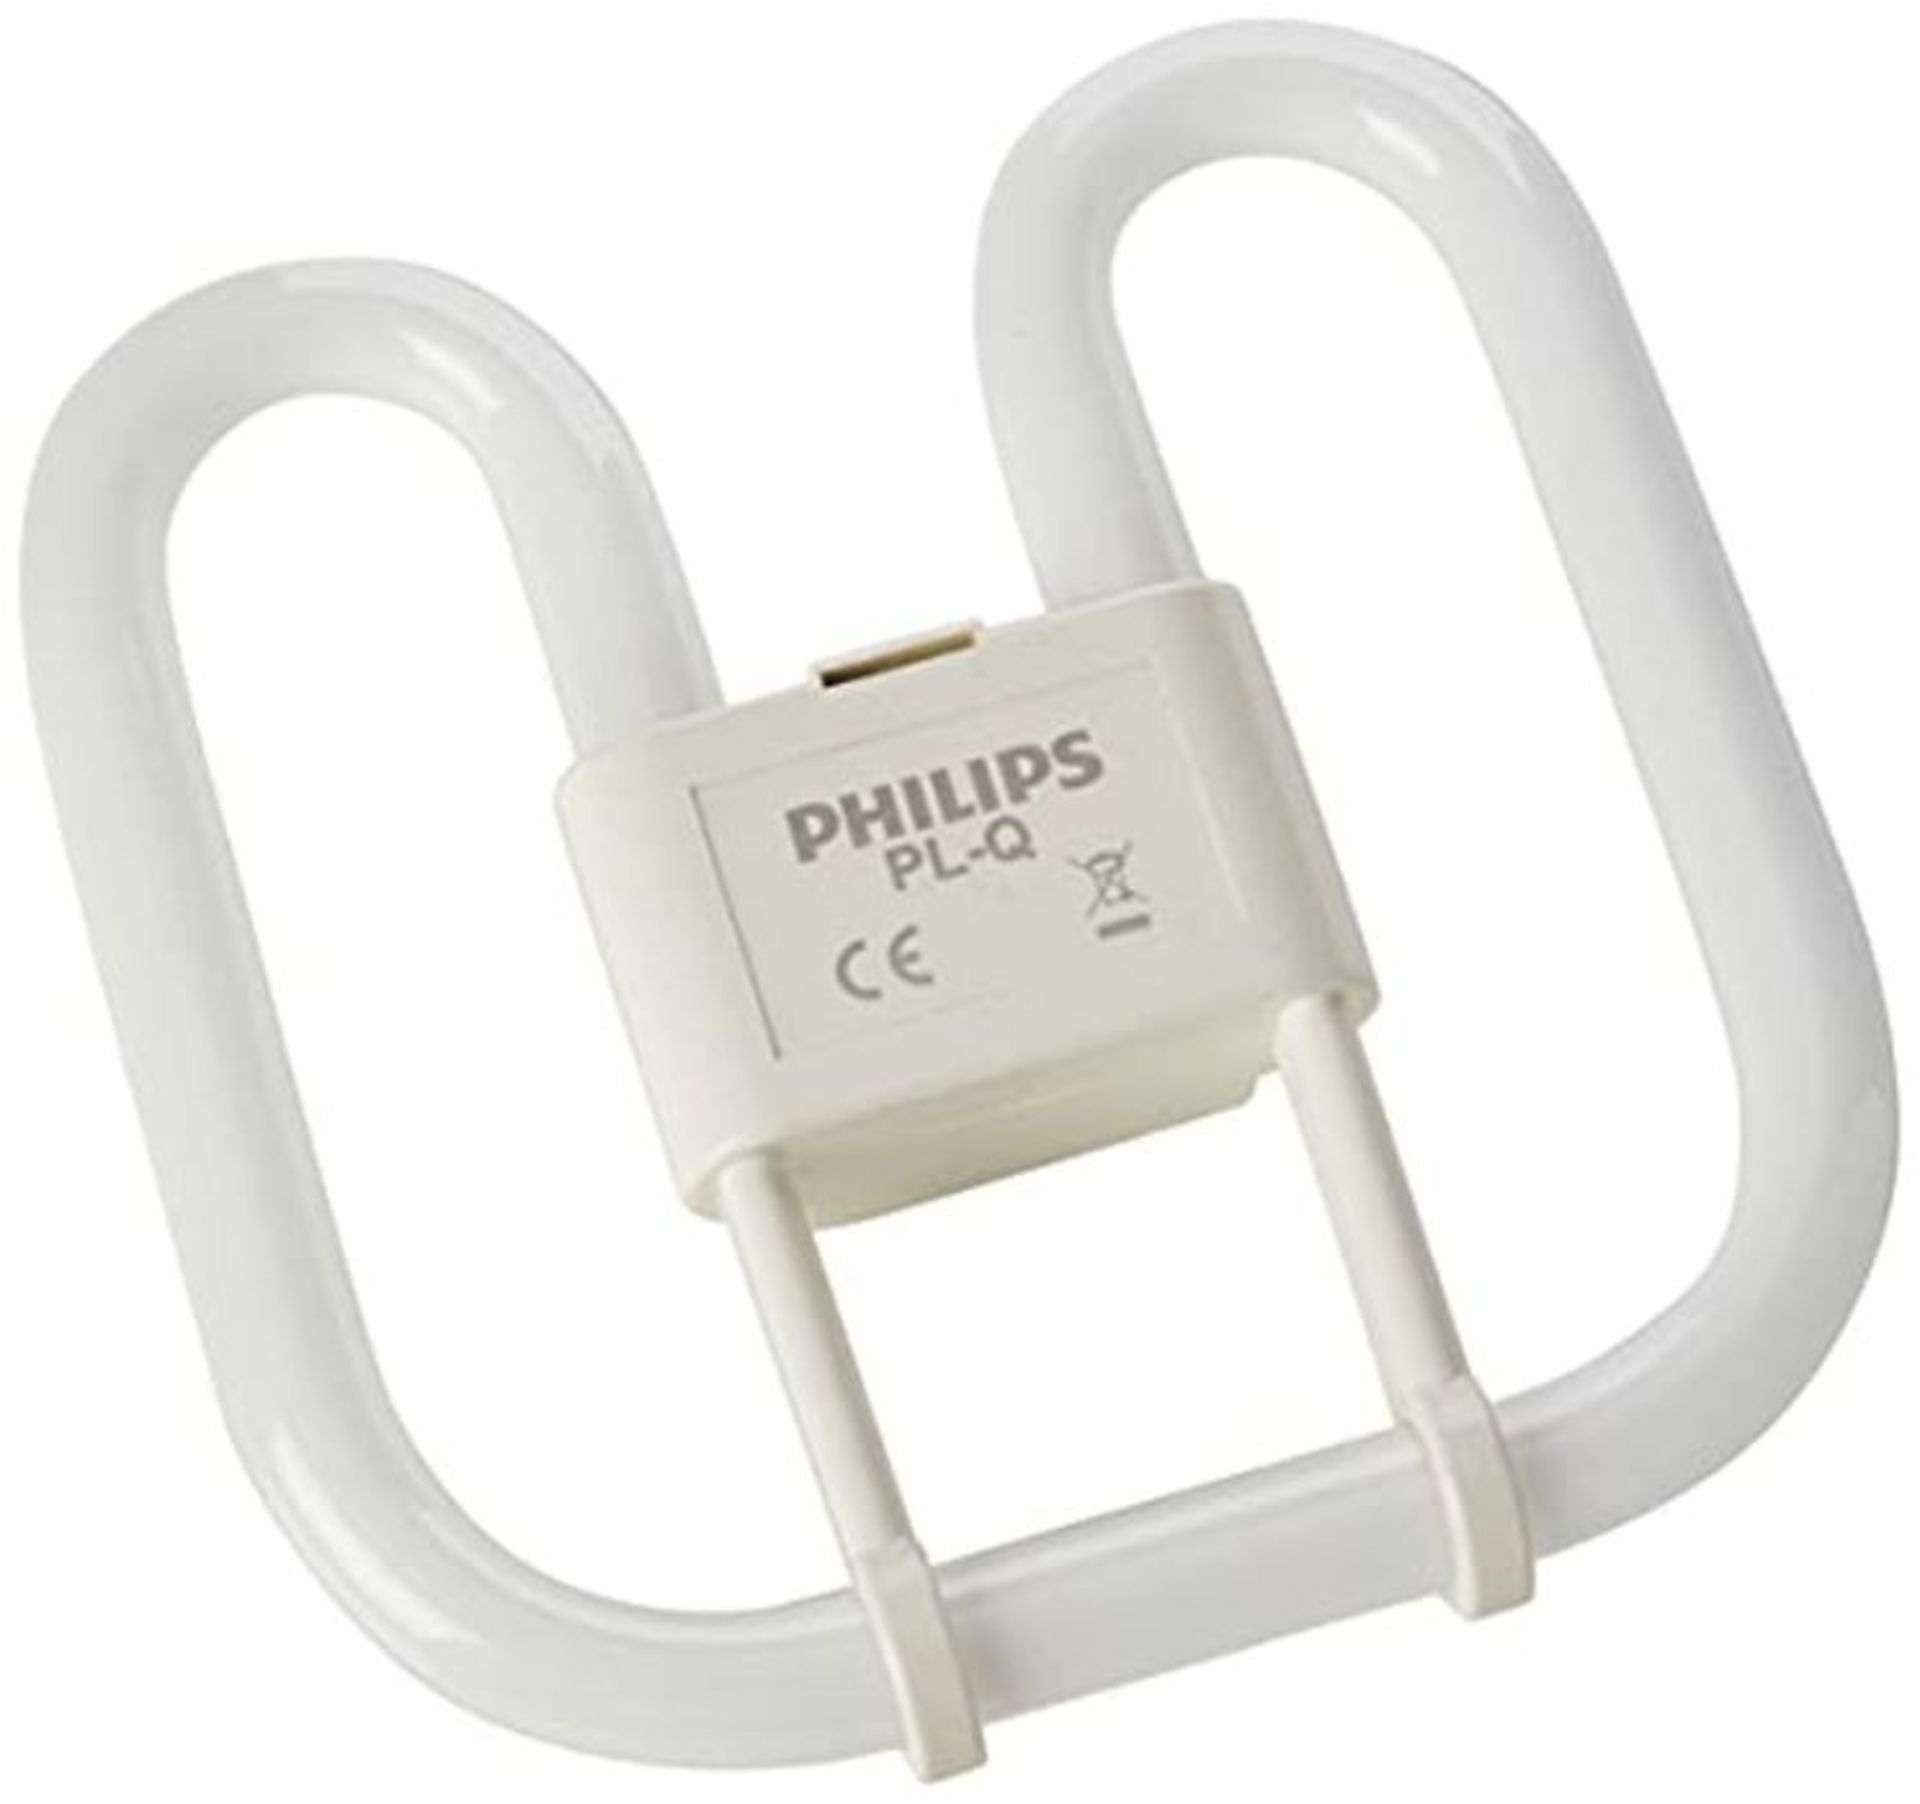 Philips PL-Q 16W GR10Q 4 Pin Compact Fluorescent Light Bulb - 16W/830/4P Warm White Li